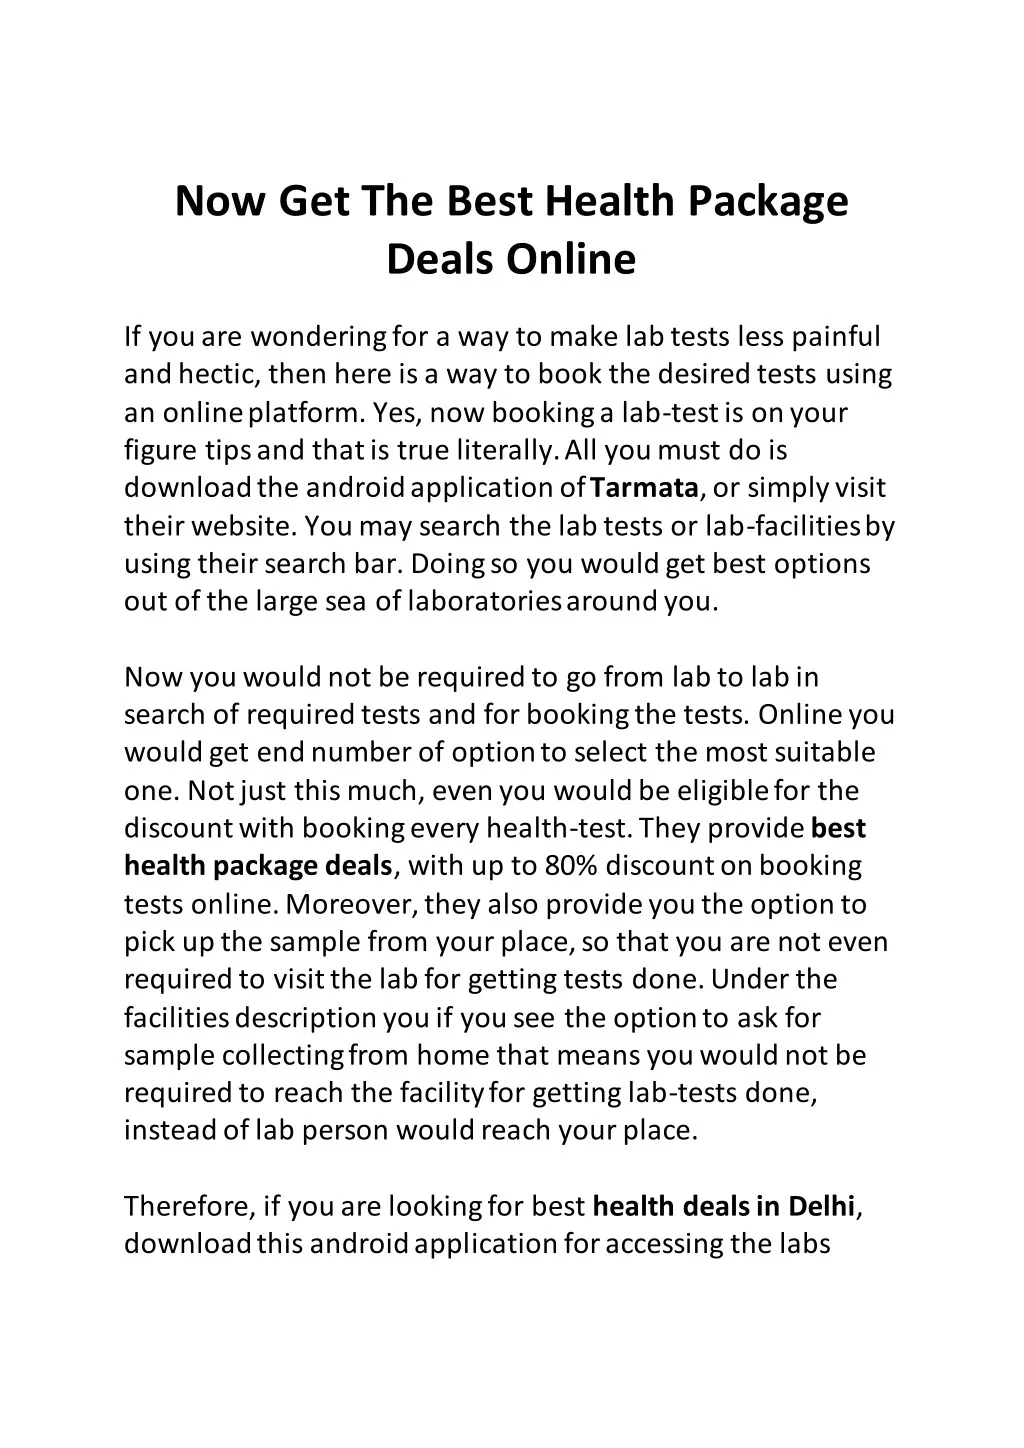 now get the best health package deals online